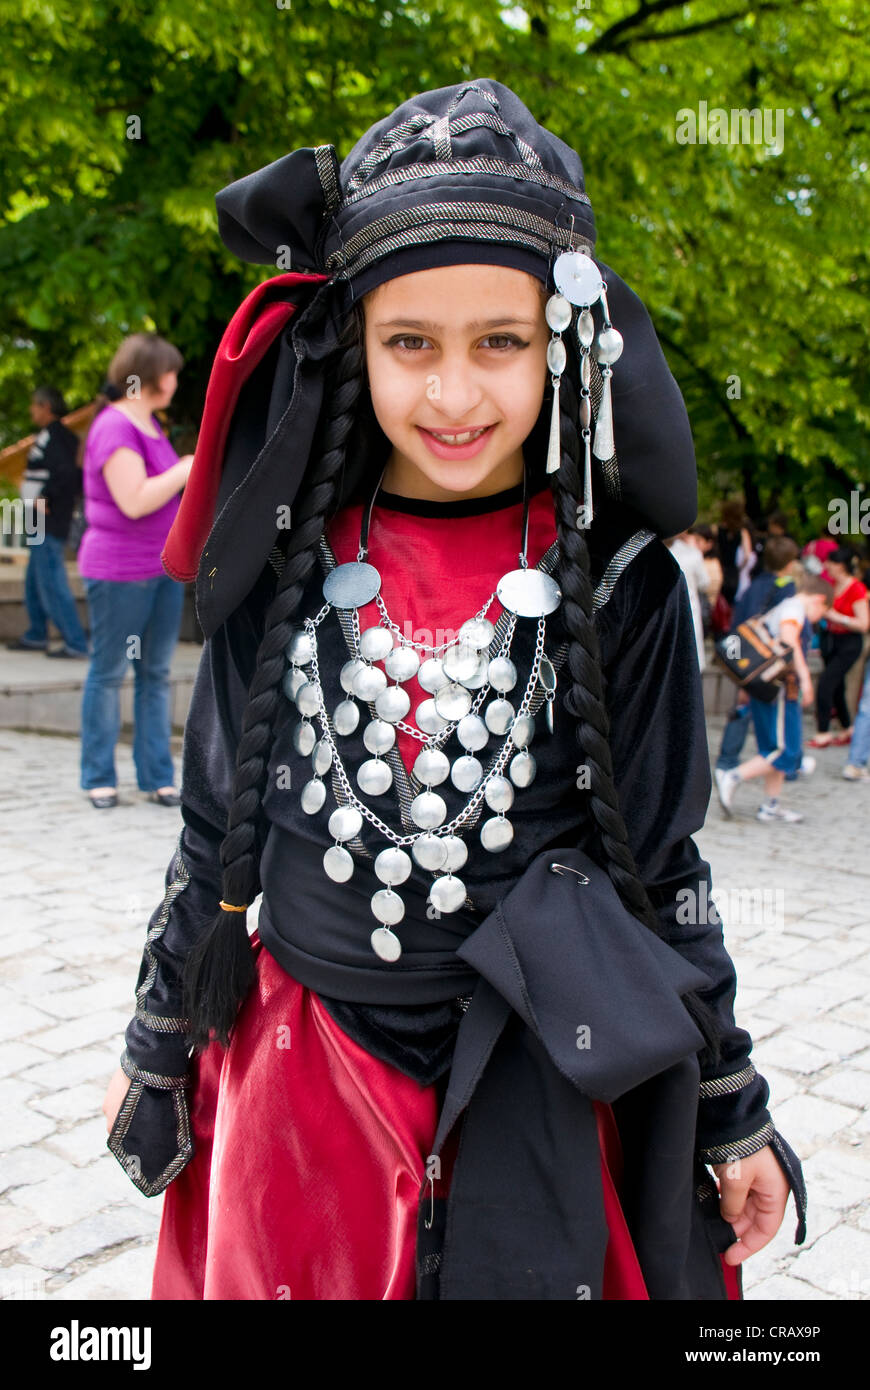 Girl wearing a costume, dancing, Sighnaghi, Kakheti province, Georgia, Caucasus region, Middle East Stock Photo